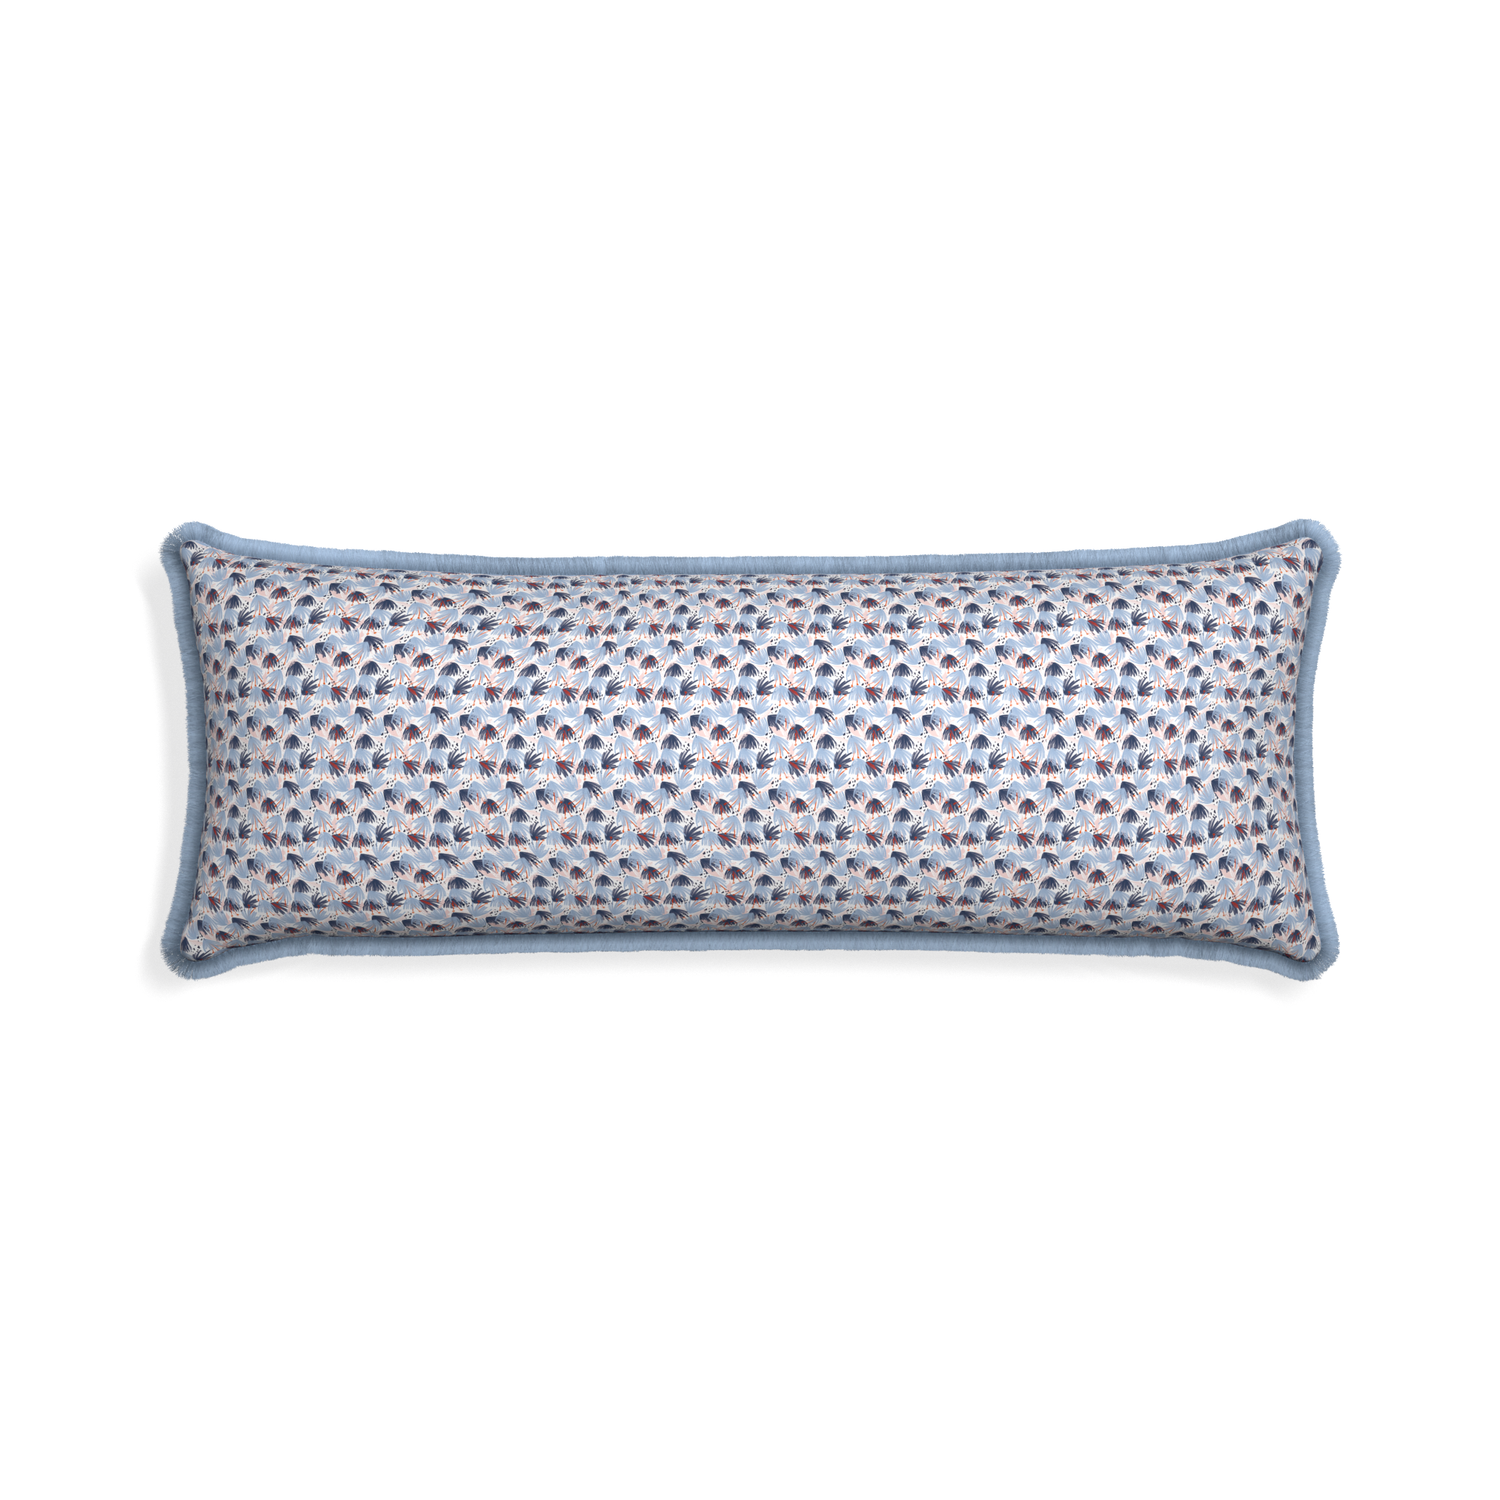 Xl-lumbar eden blue custom pillow with sky fringe on white background